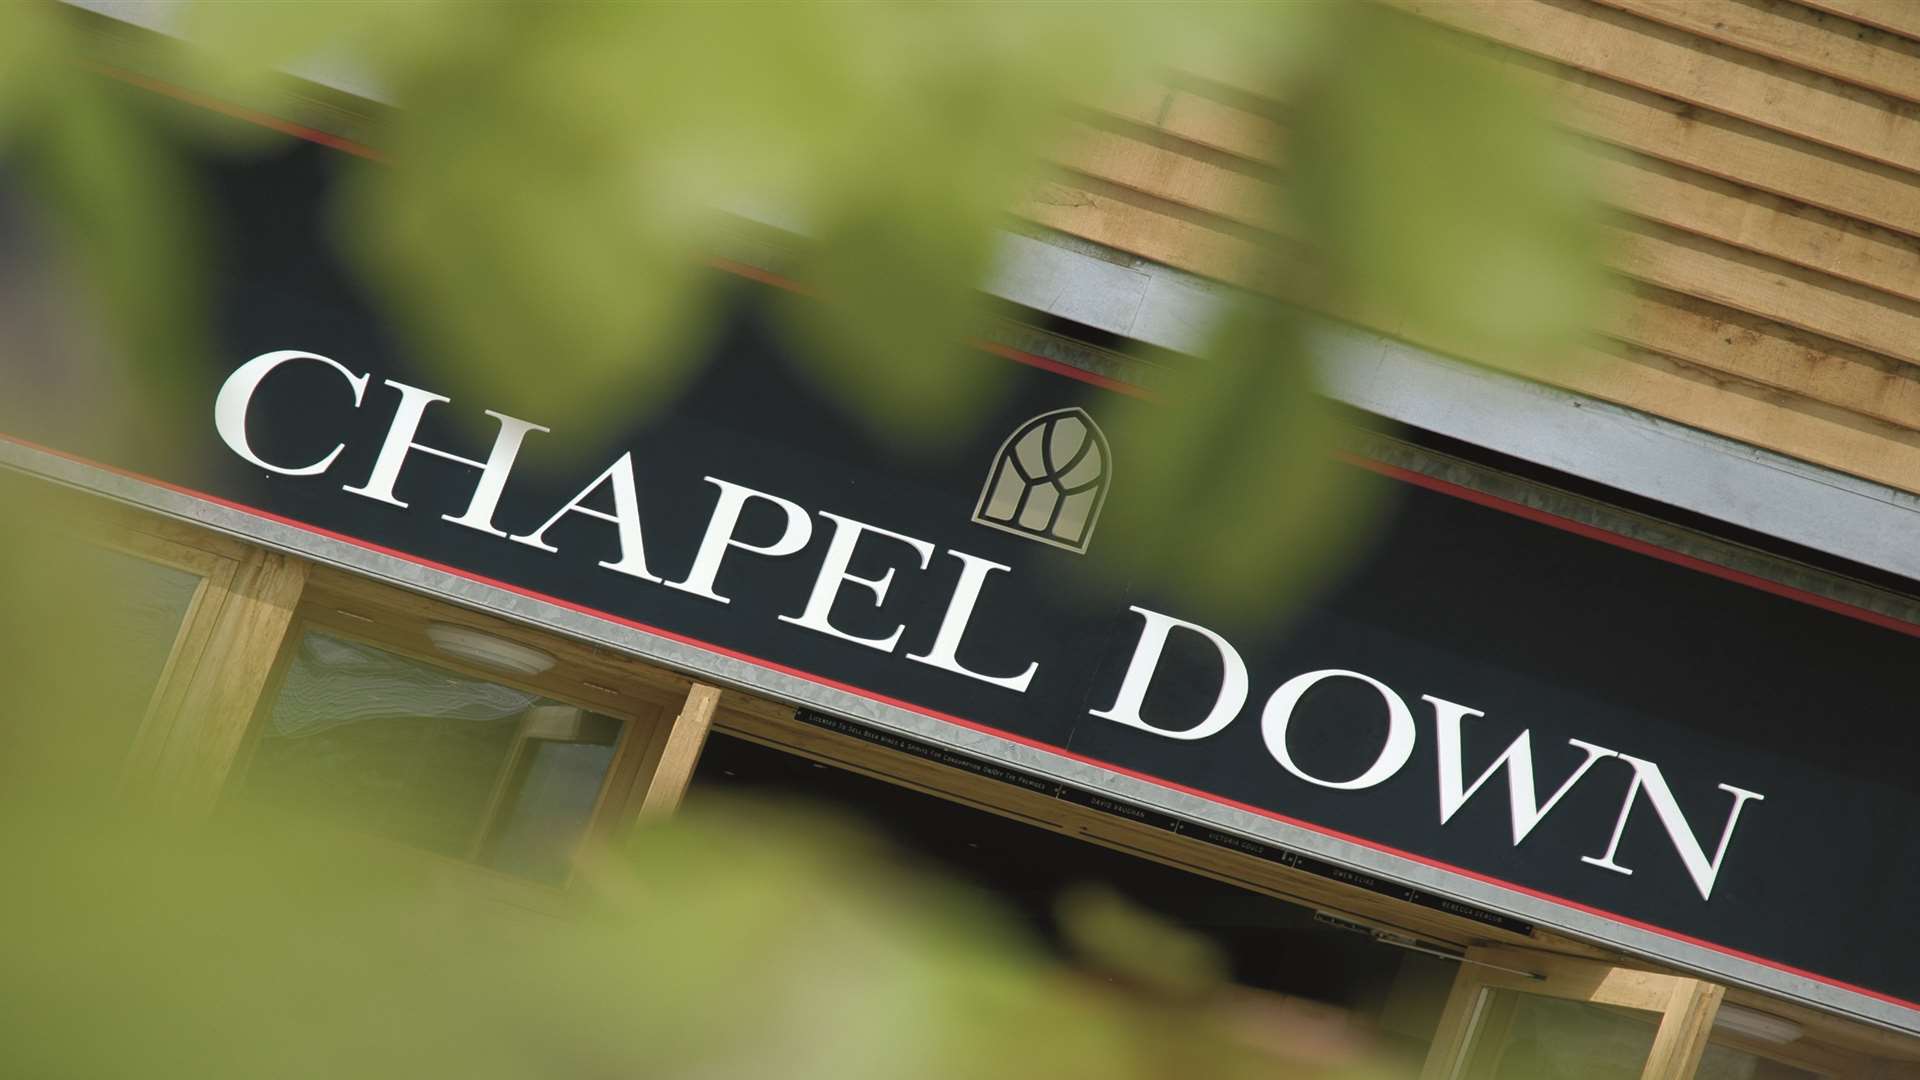 Chapel Down Winery